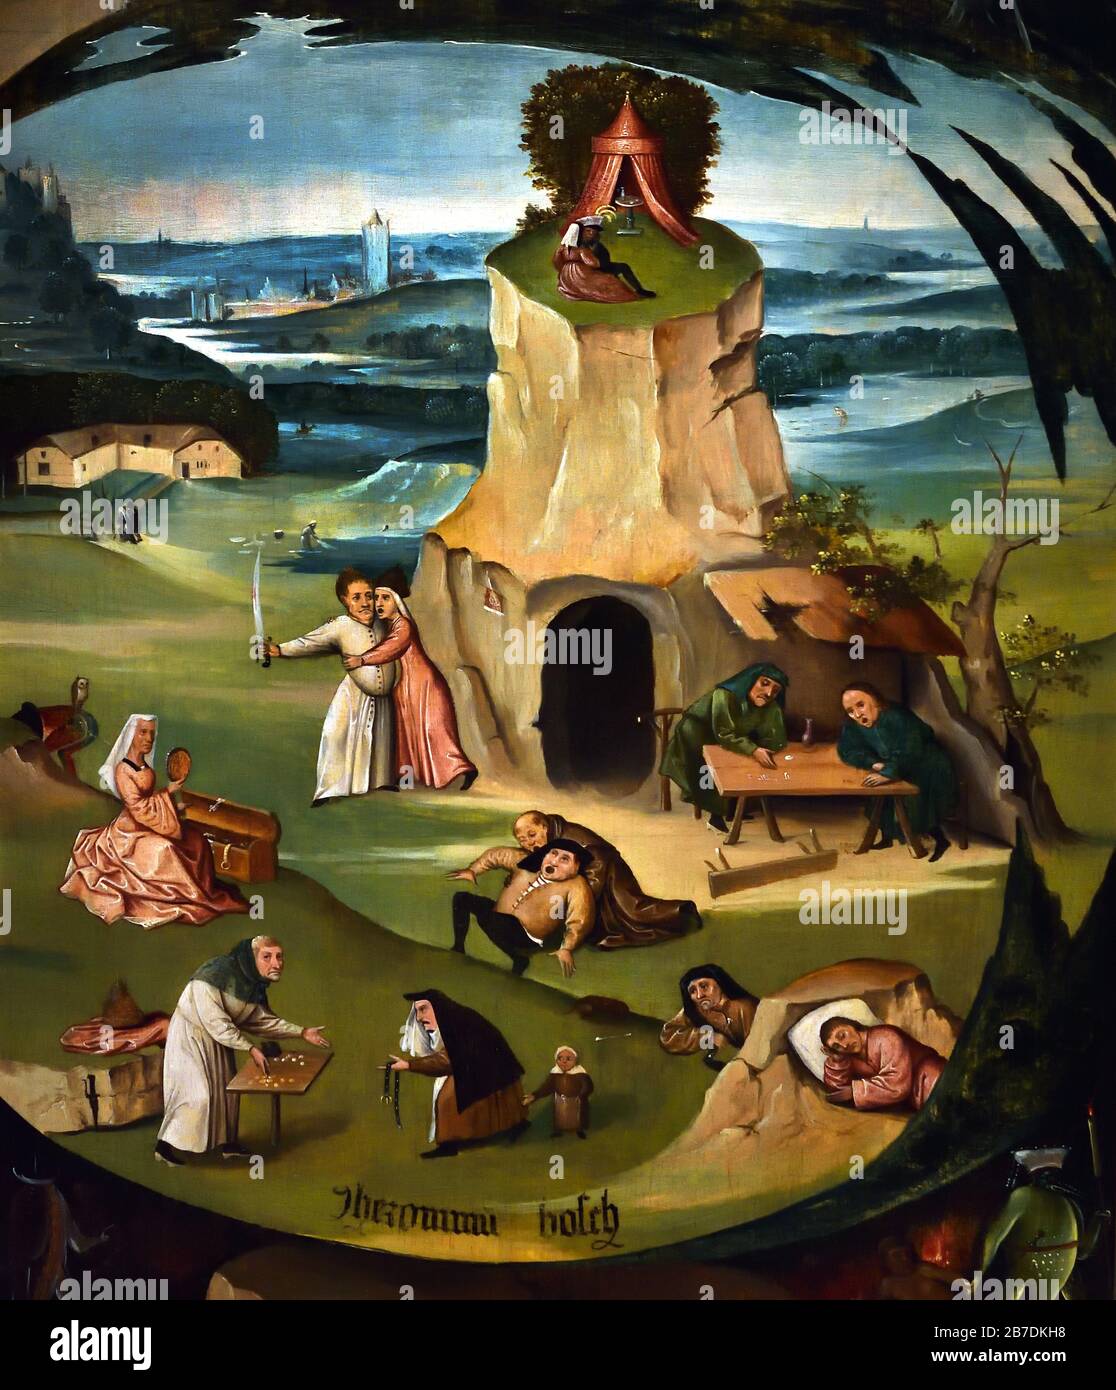 The Seven Deadly Sins 1500 by Hieronymus van Aken (Bosch) 1450 - 1516 The Netherlands Dutch 16th - 17th century, Stock Photo